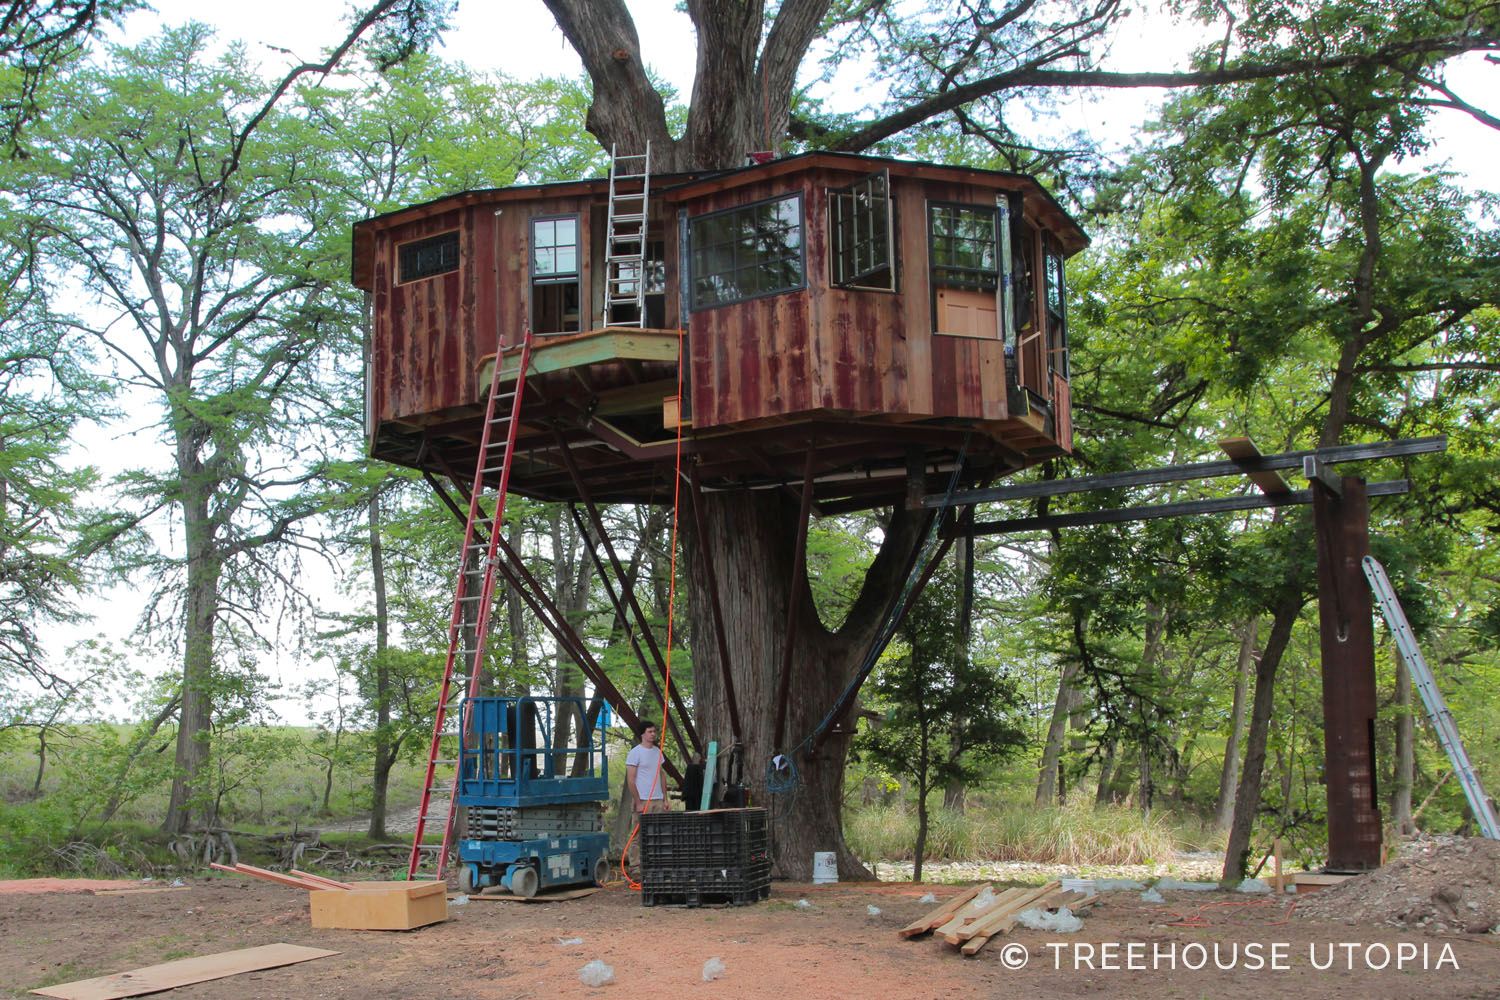  Carrousel in progress  at treehouse Utopia 